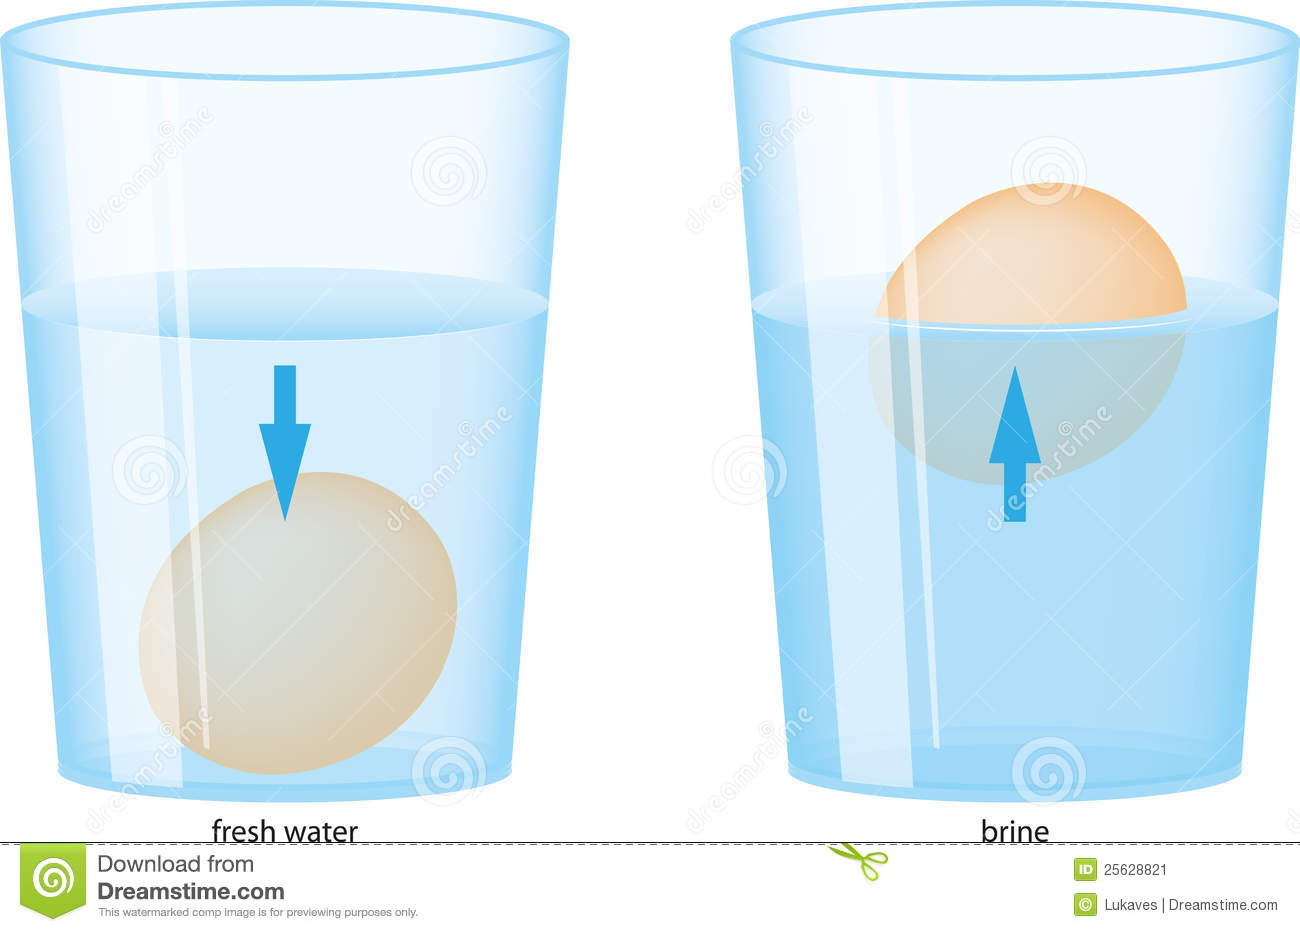 The Egg In Salt Water  Higher Density Of Water The Egg Floats